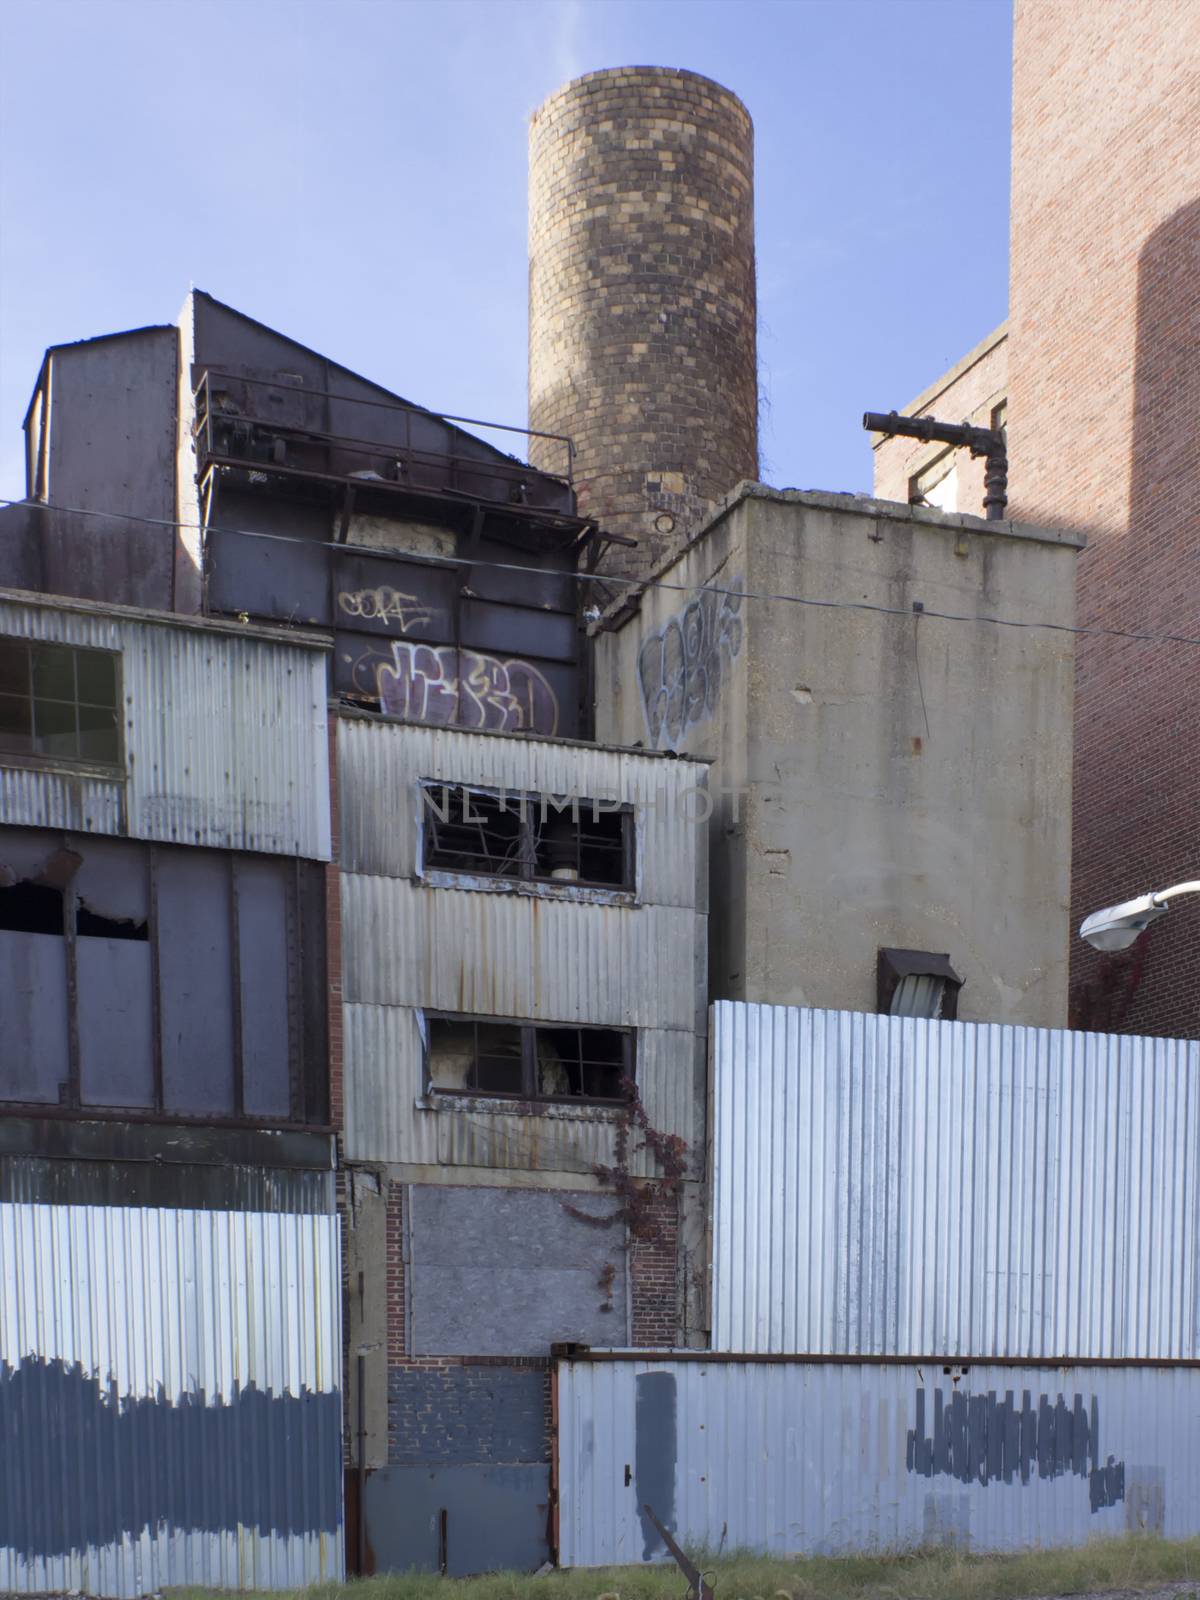 Abandoned industrial buildings by CharlieFloyd